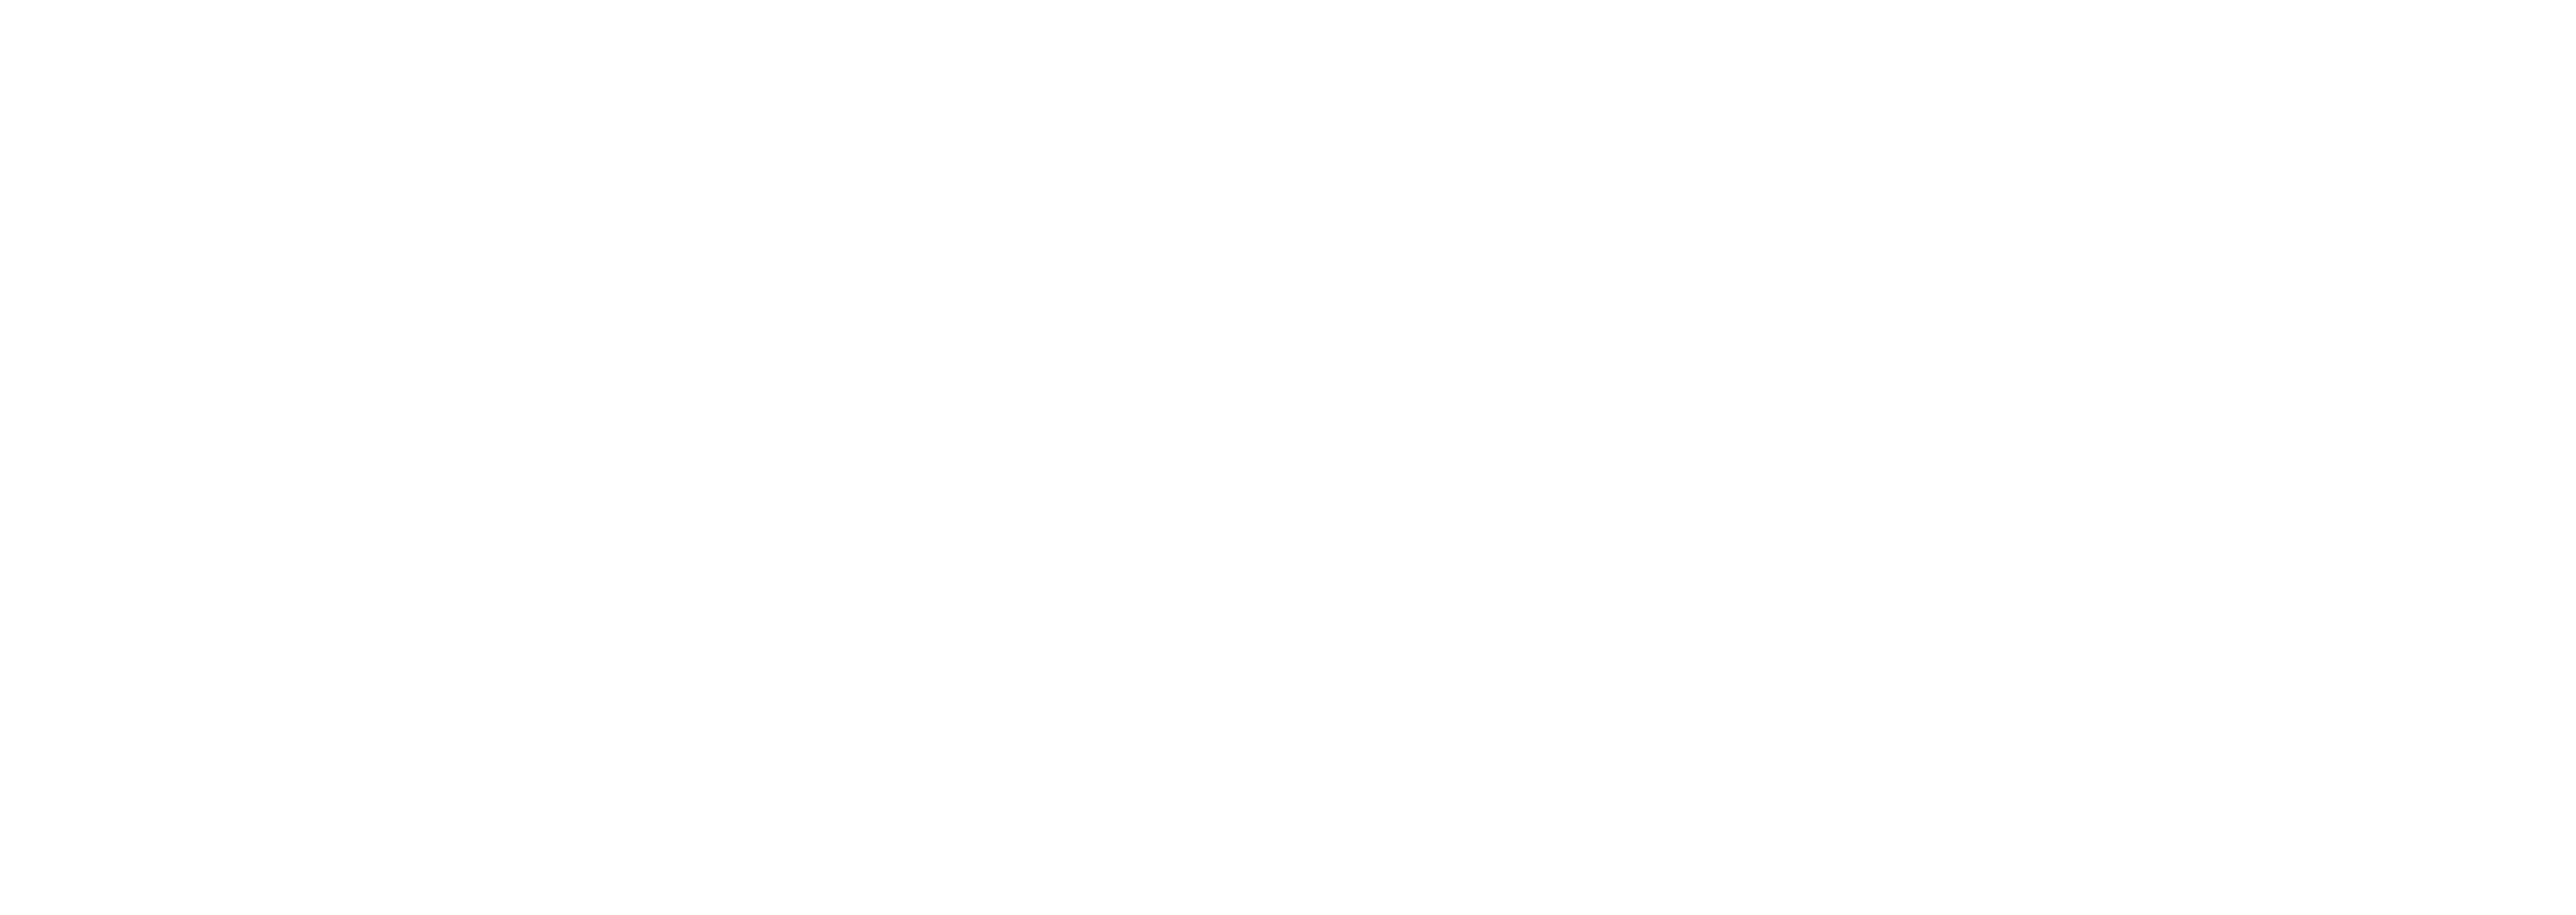 Liverpool John Moores University (LJMU) Logo